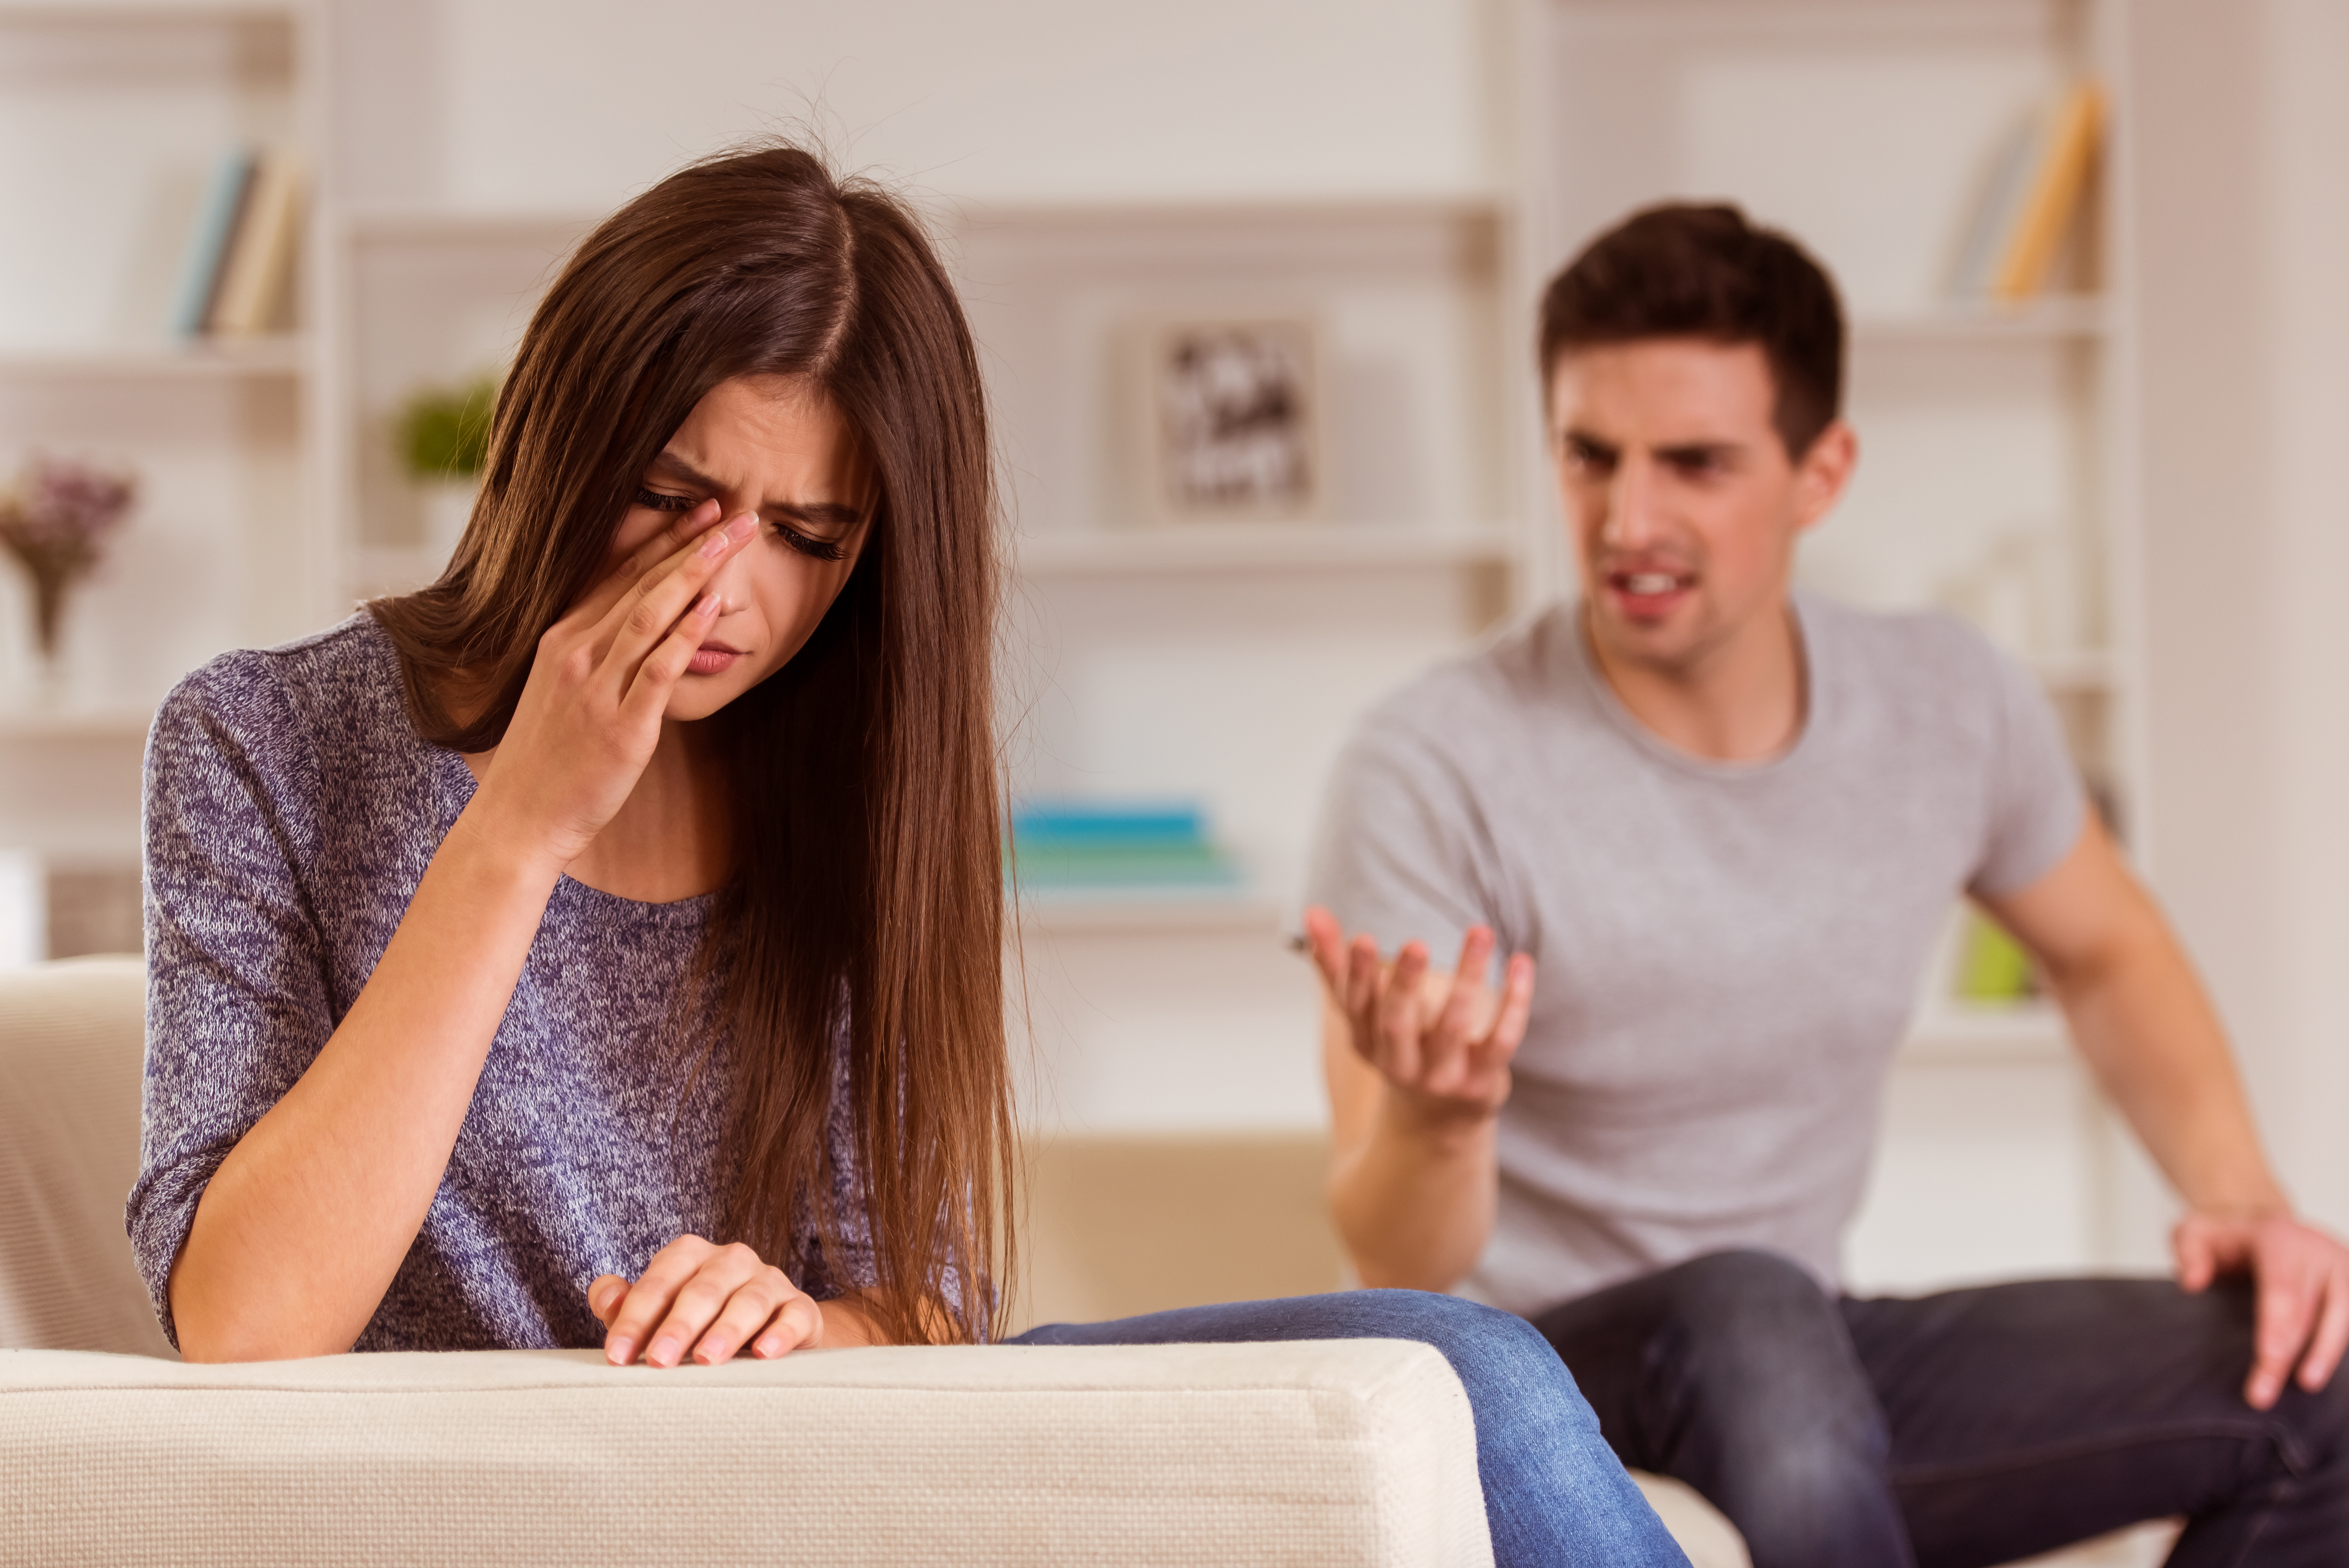 A man and a woman having an argument | Source: Shutterstock